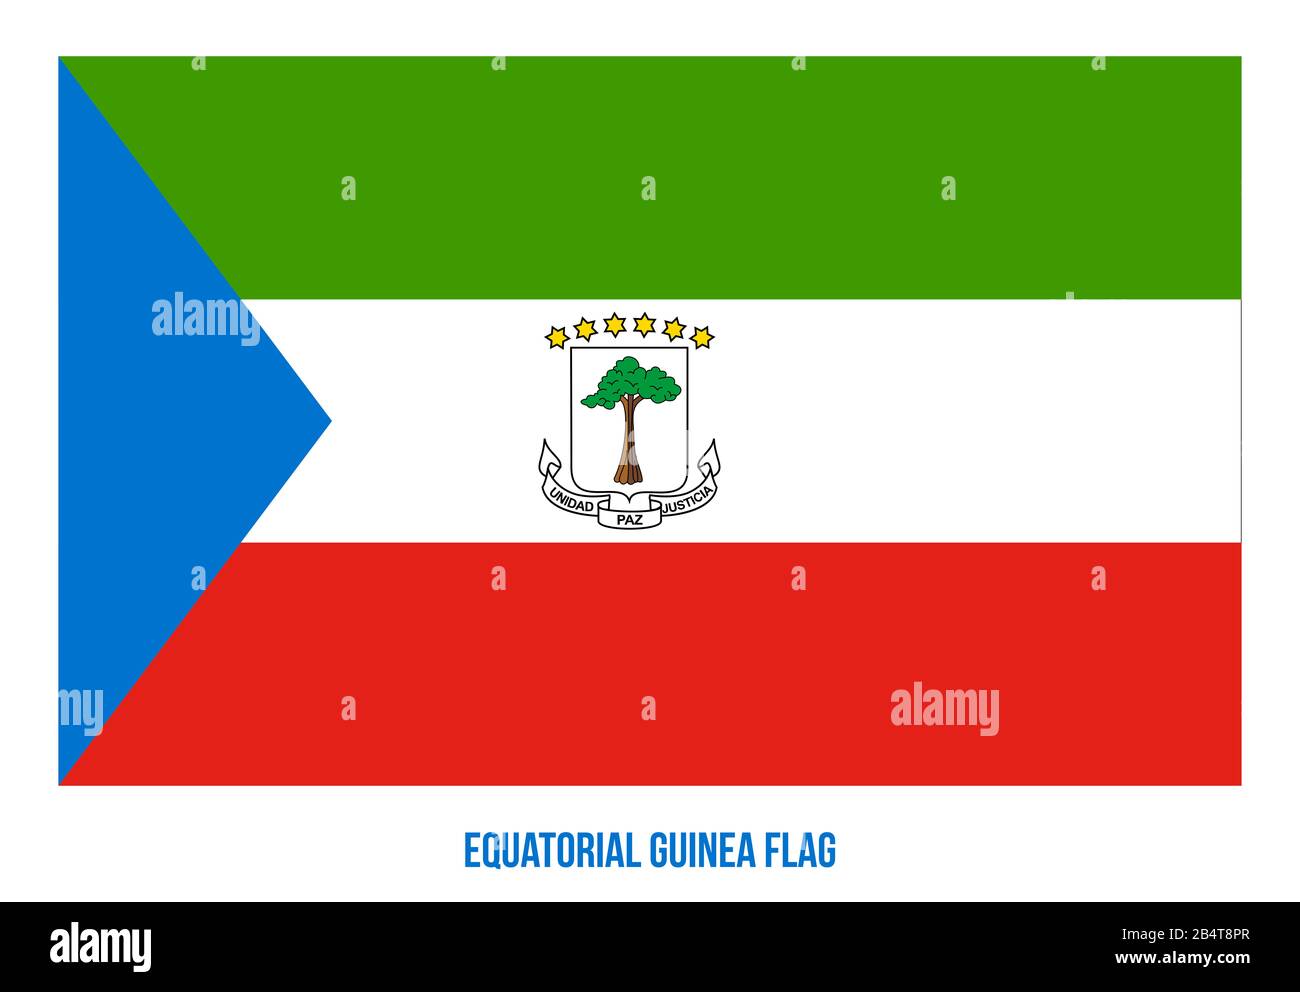 Equatorial Guinea Flag Vector Illustration on White Background. Equatorial Guinea National Flag. Stock Photo